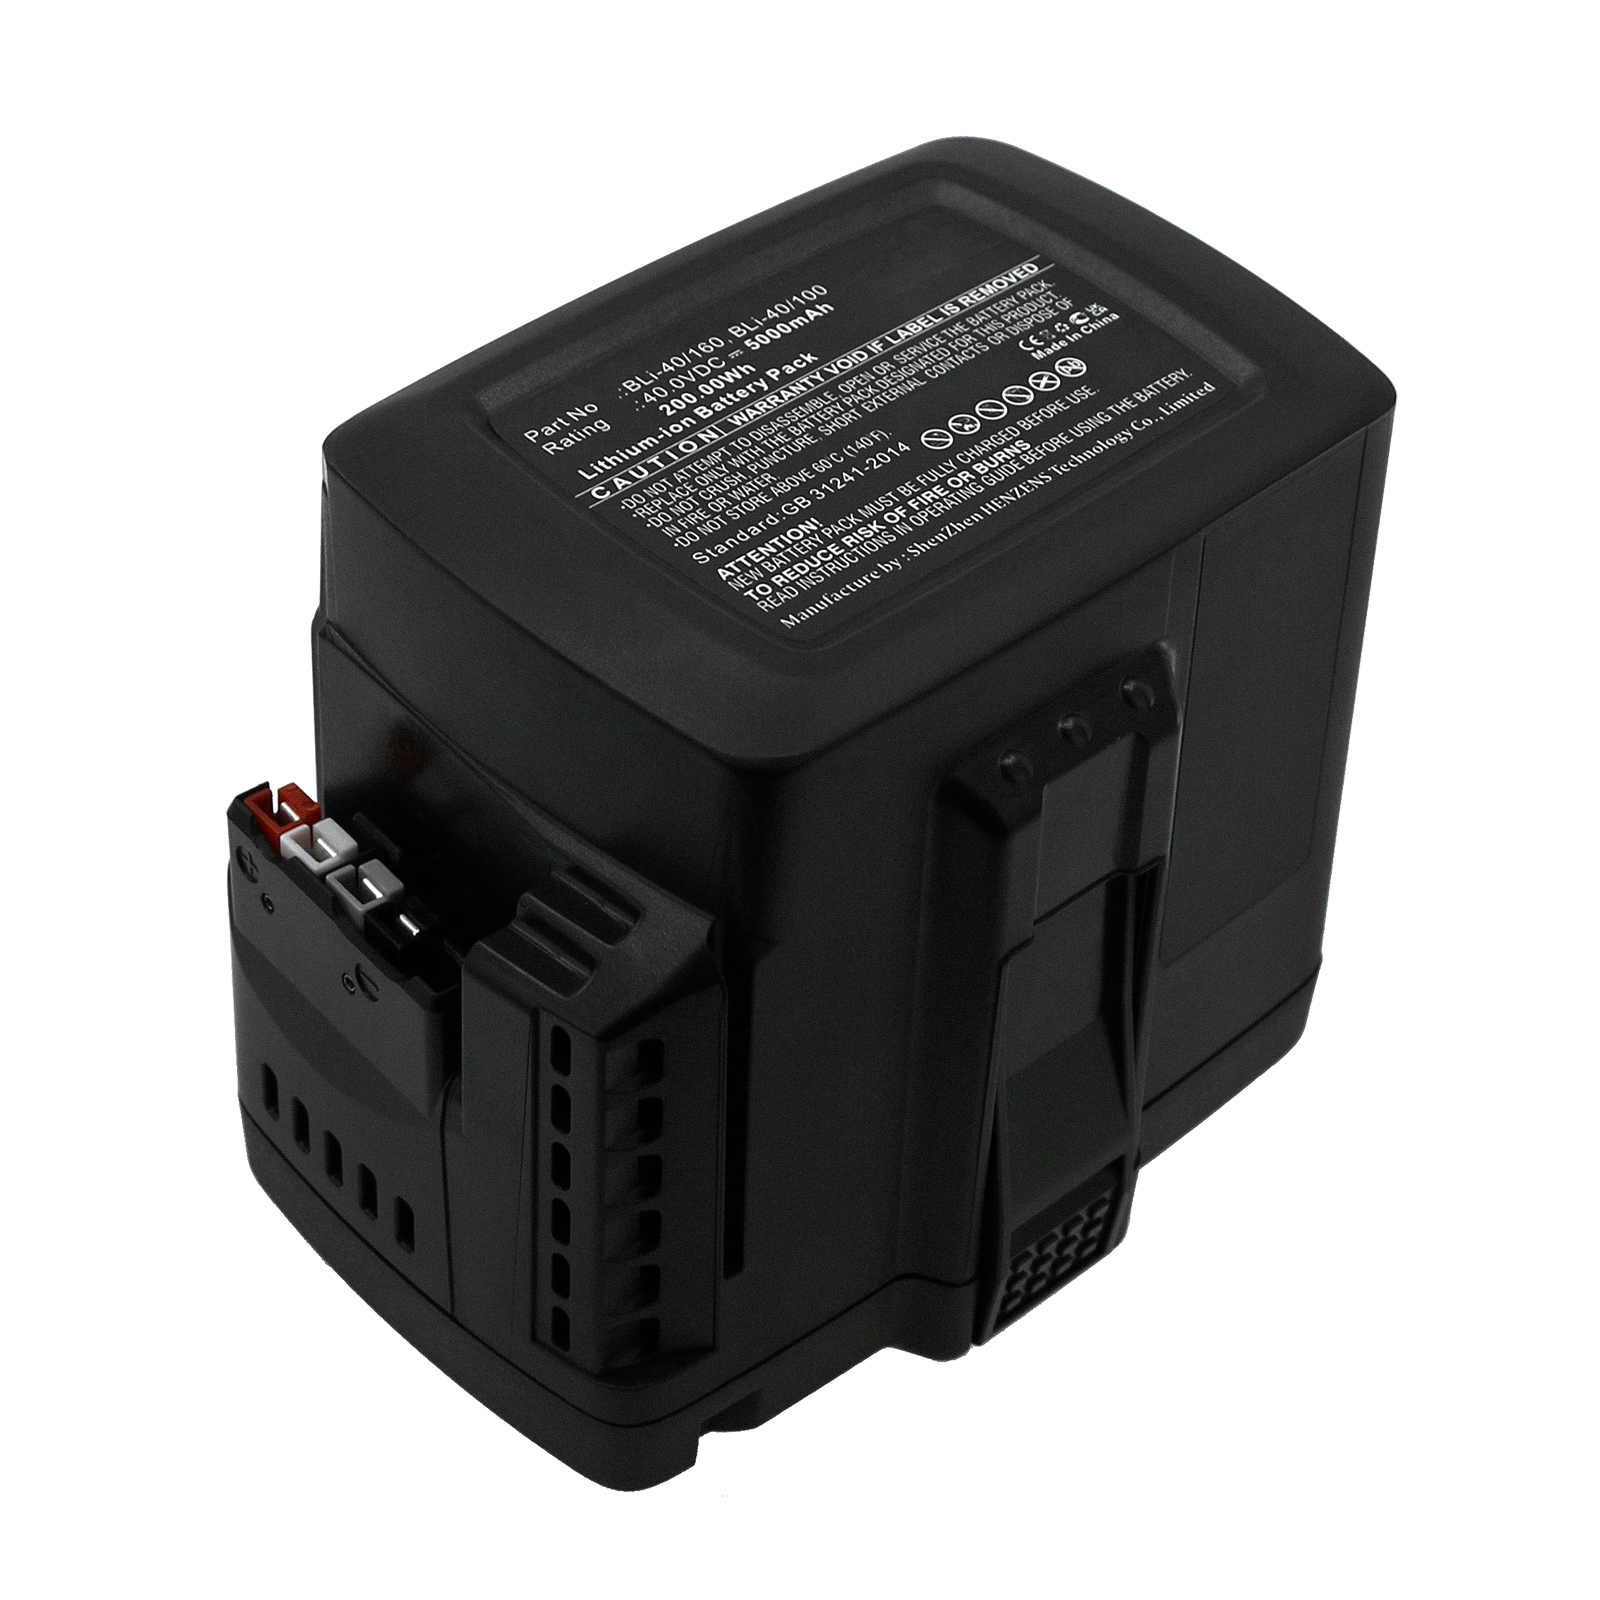 Synergy Digital Lawn Mower Battery, Compatible with Gardena BLi-40/100 Lawn Mower Battery (Li-ion, 40V, 5000mAh)